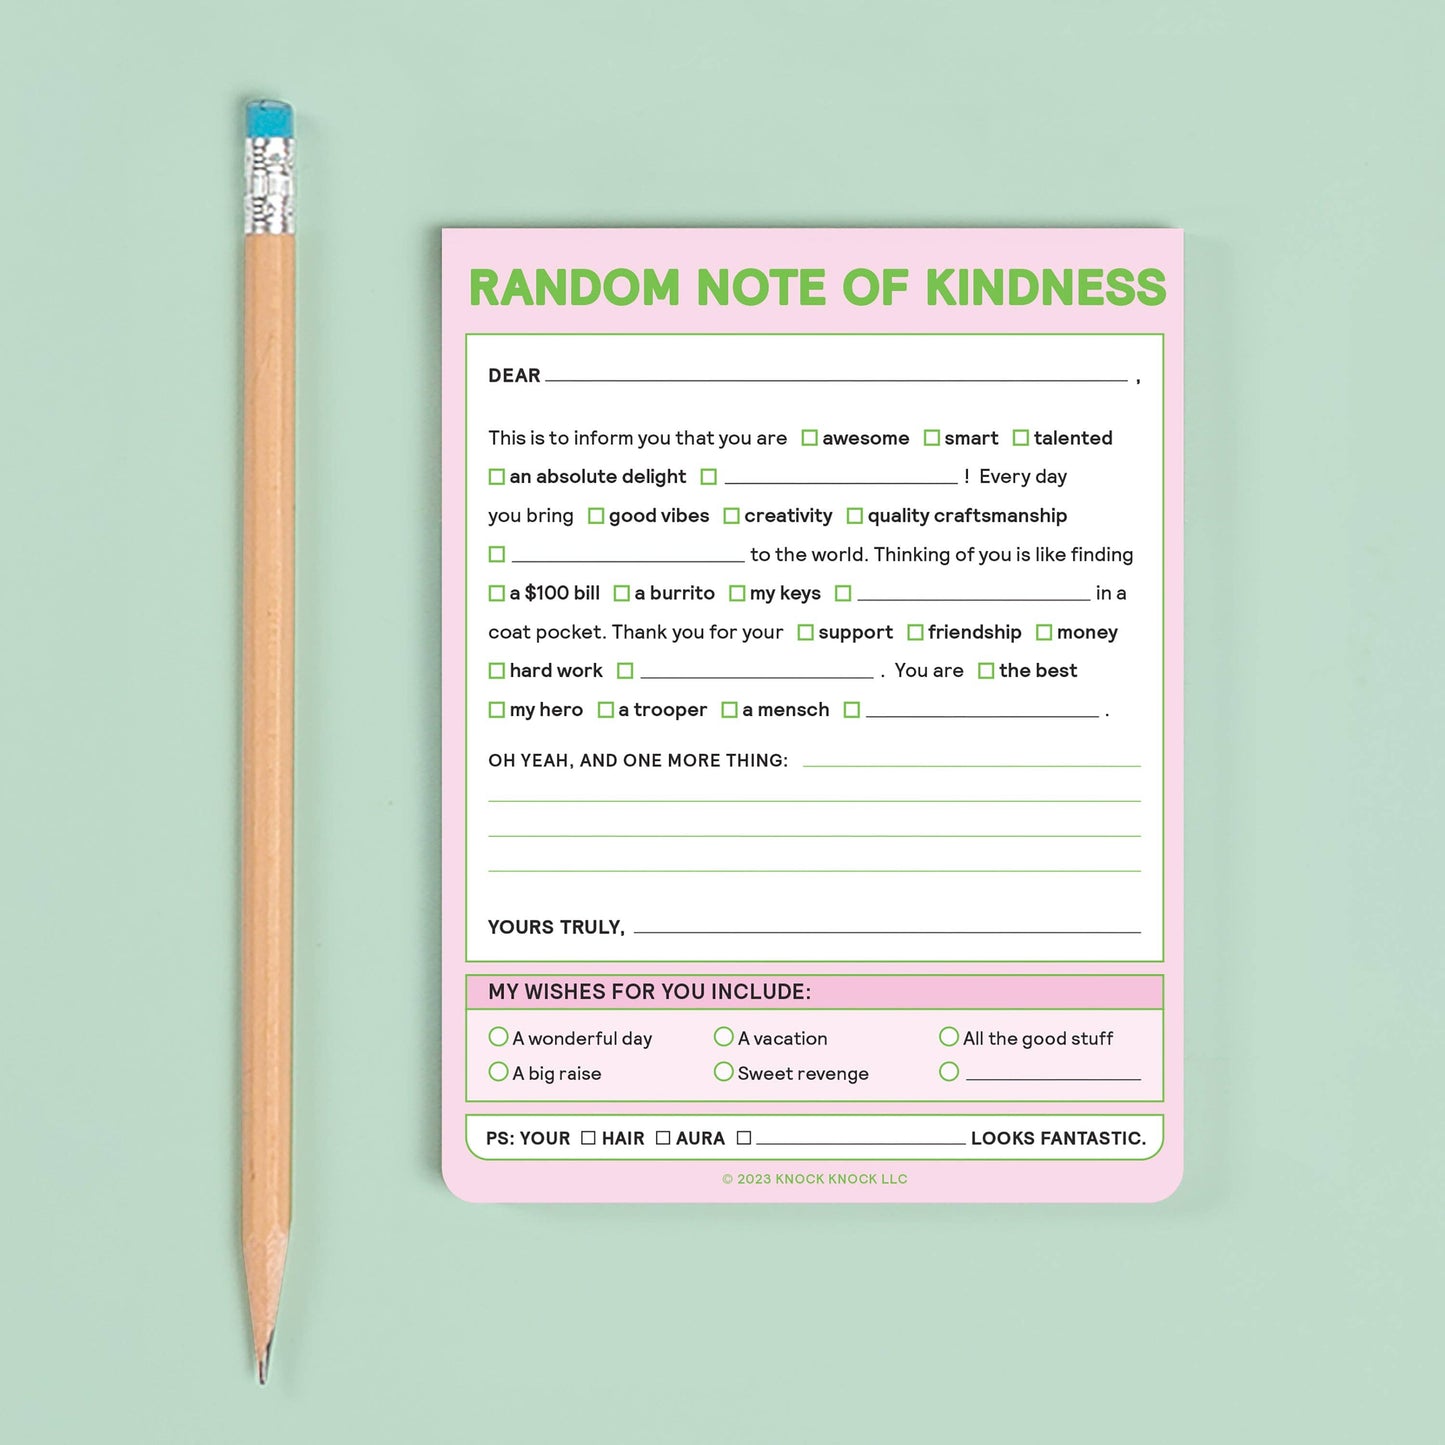 Knock Knock Random Note of Kindness Nifty Note Knock Knock UK